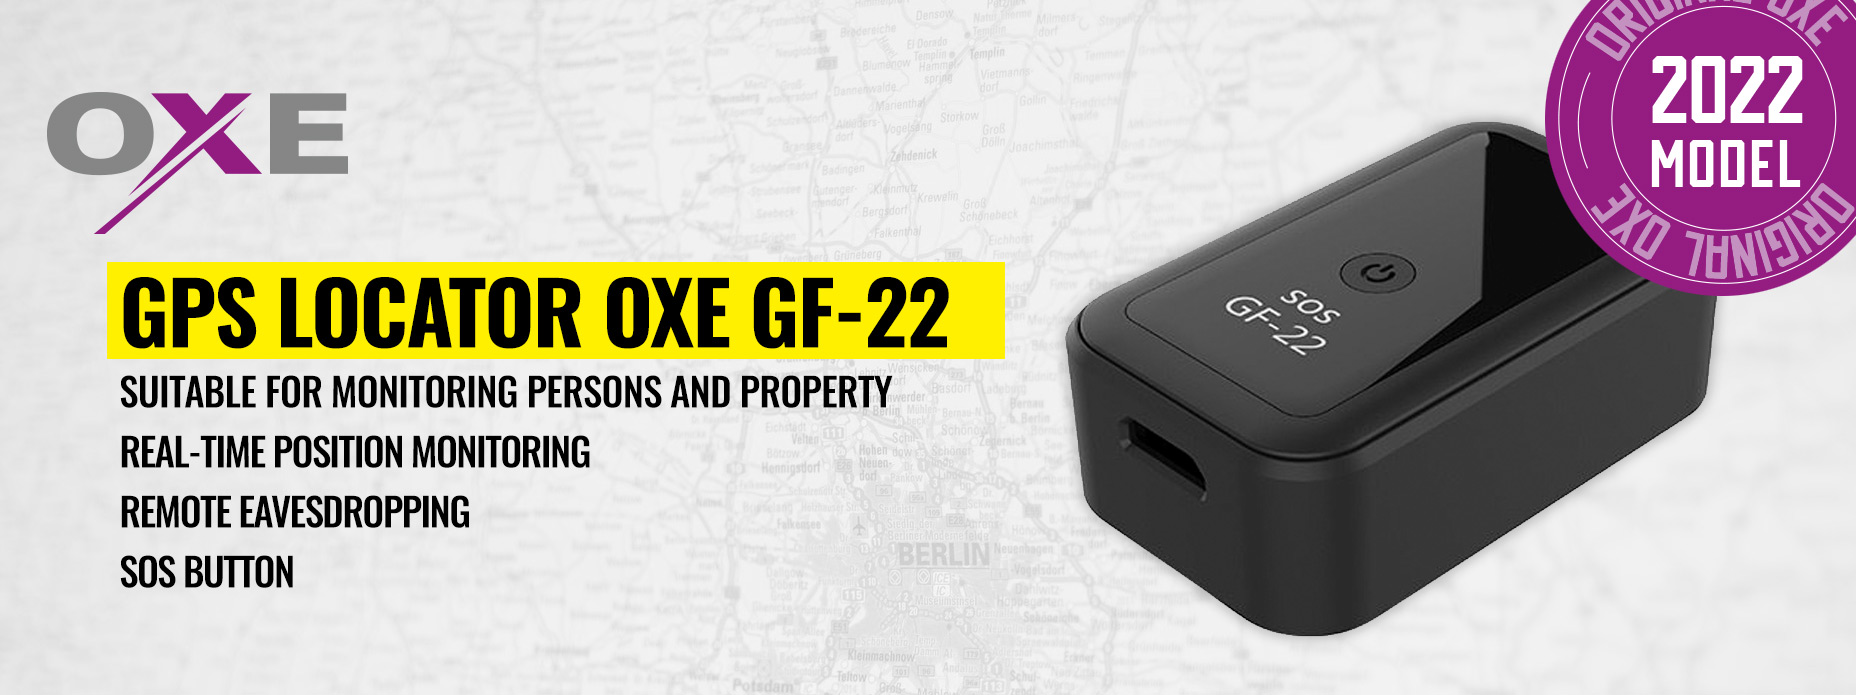 OXE GPS Locator GF-22